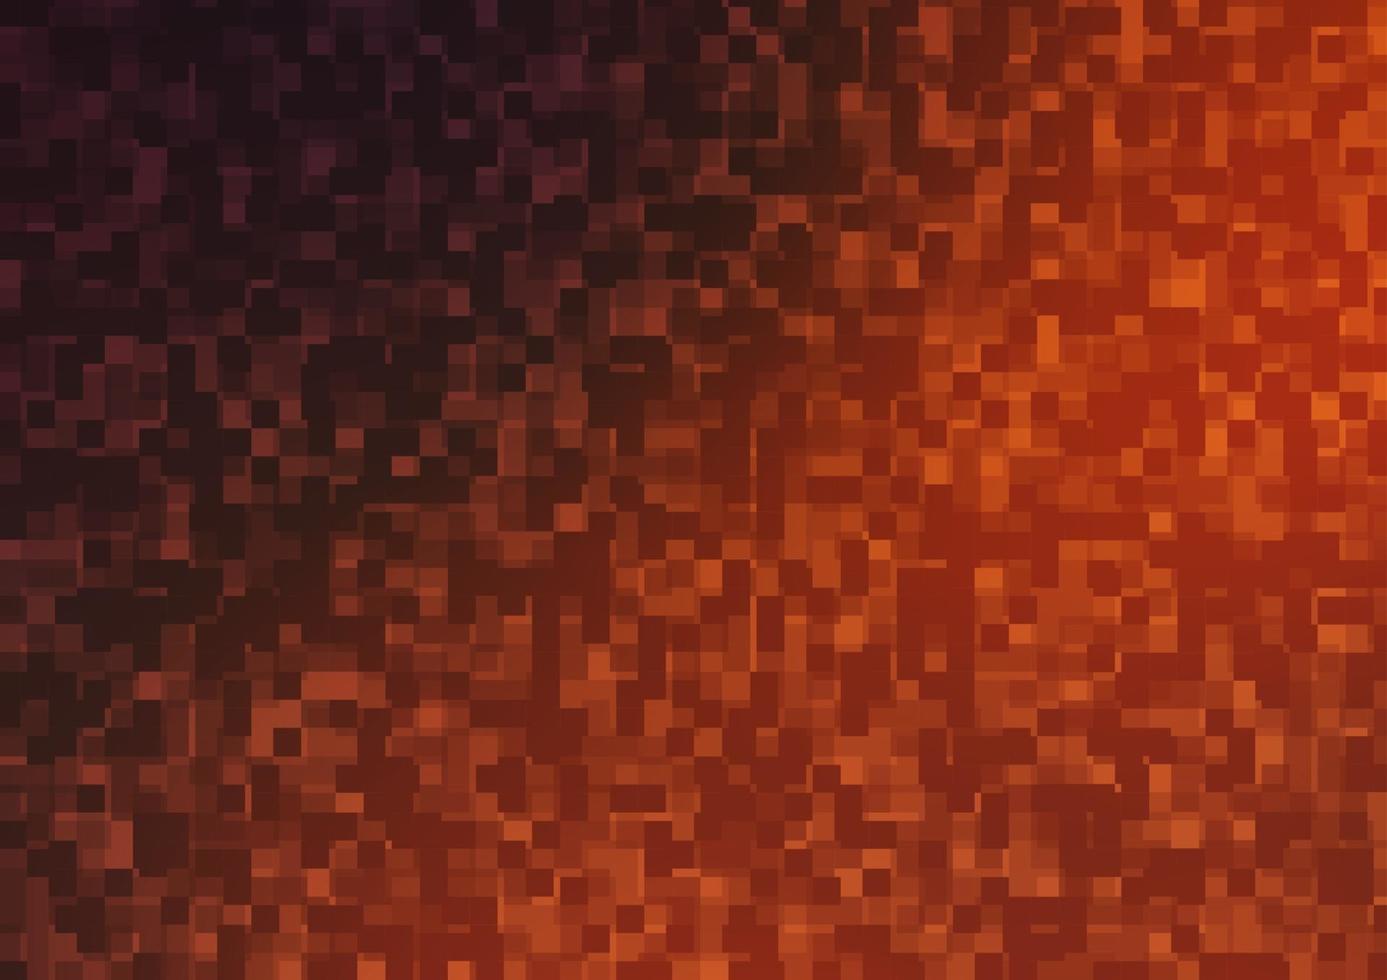 ljus orange vektor mönster i fyrkantig stil.